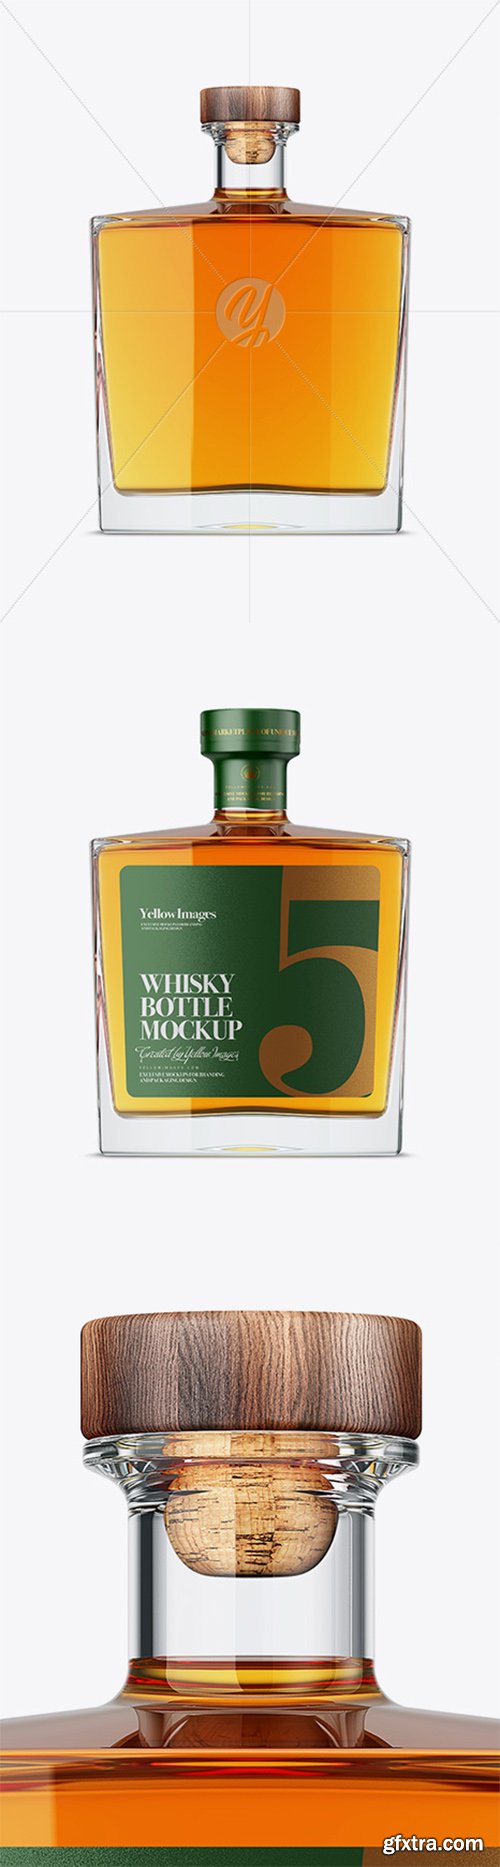 Square Glass Bottle W/ Whisky Mockup 19995